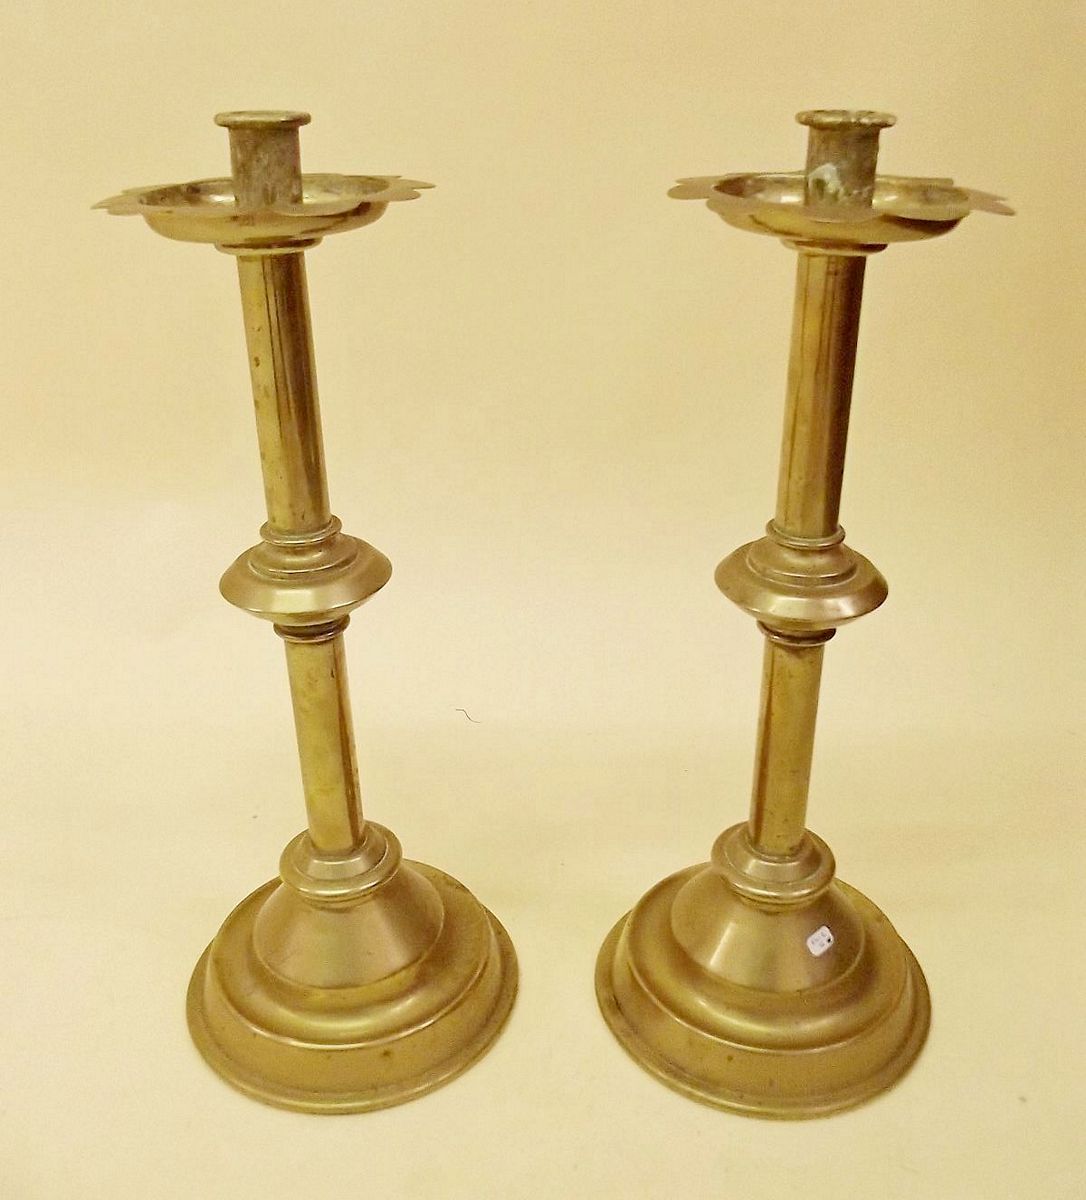 A pair of large brass ecclesiastical candlesticks - 46cm high